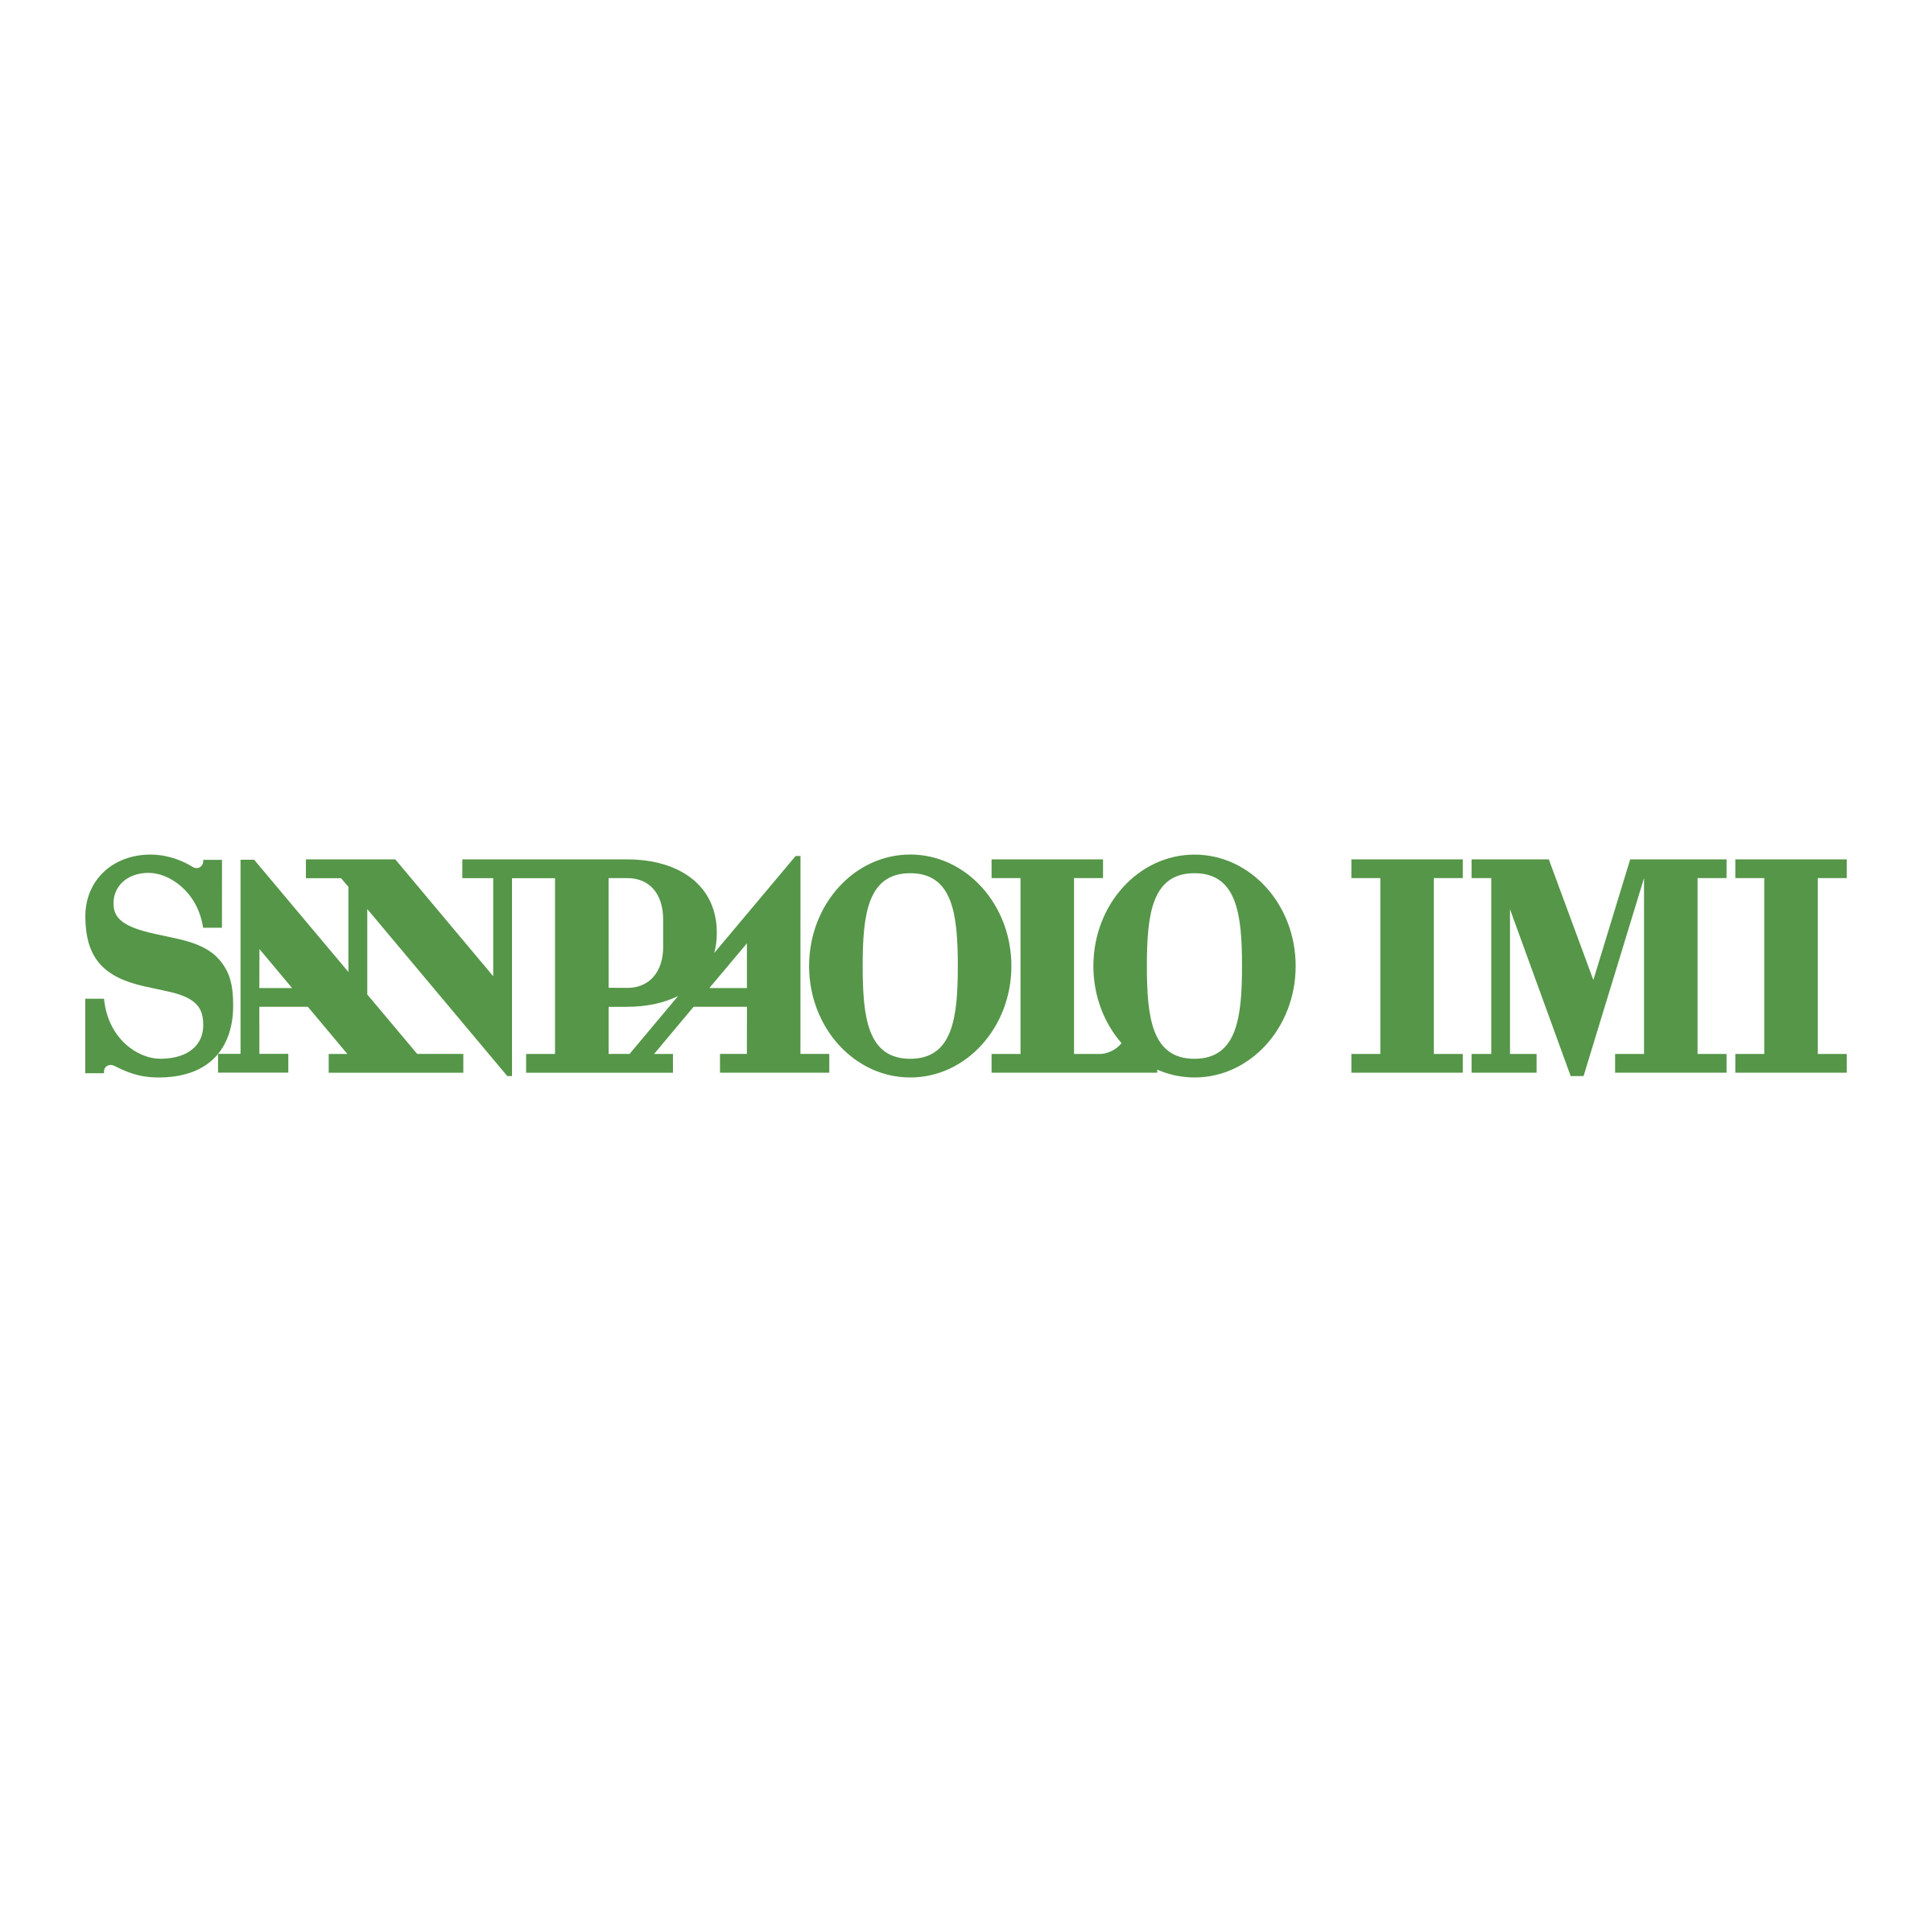 Imi Logo - SanPaolo IMI Logo PNG Transparent & SVG Vector